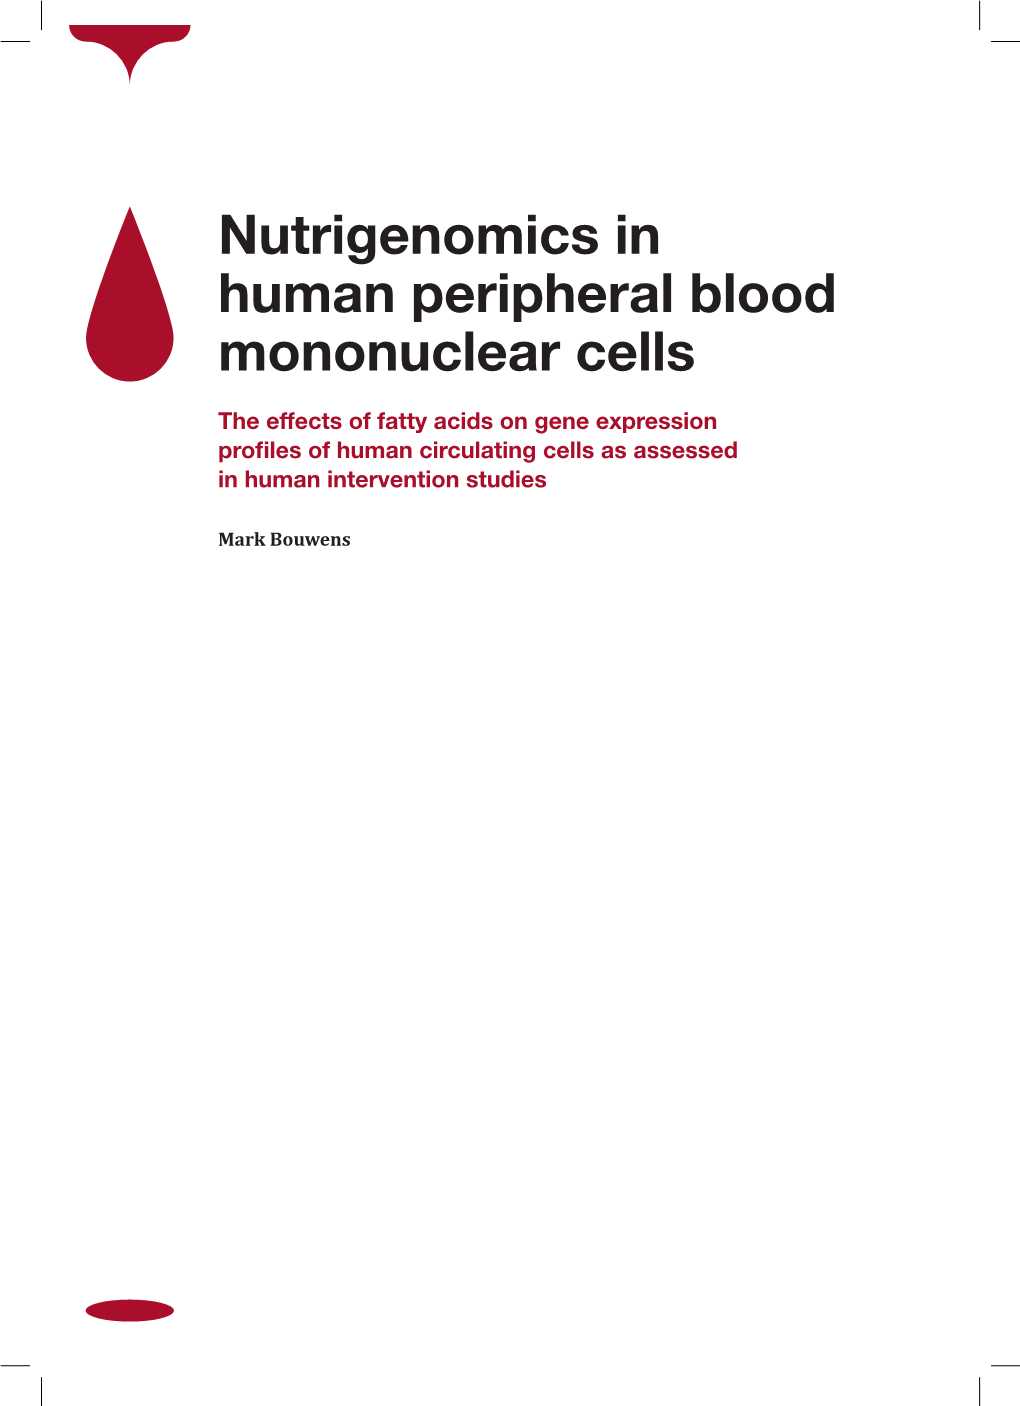 Nutrigenomics in Human Peripheral Blood Mononuclear Cells